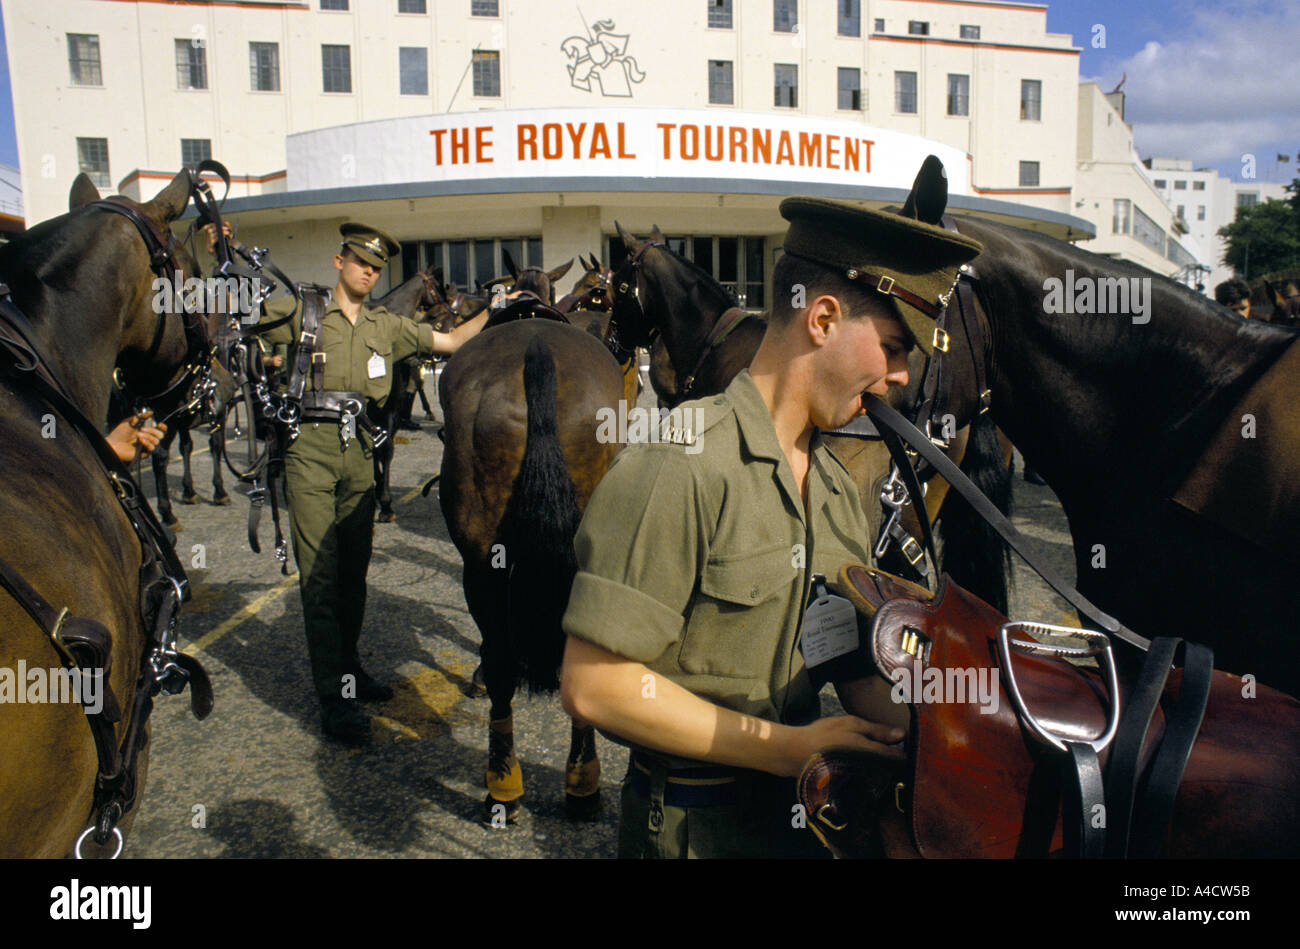 MEMBERS OF RHA - ROYAL HORSE ARTILLERY, TENDING HORSES OUTSIDE EARLS COURT, SCENE AT ROYAL TOURNAMENT. LONDON 1990 Stock Photo